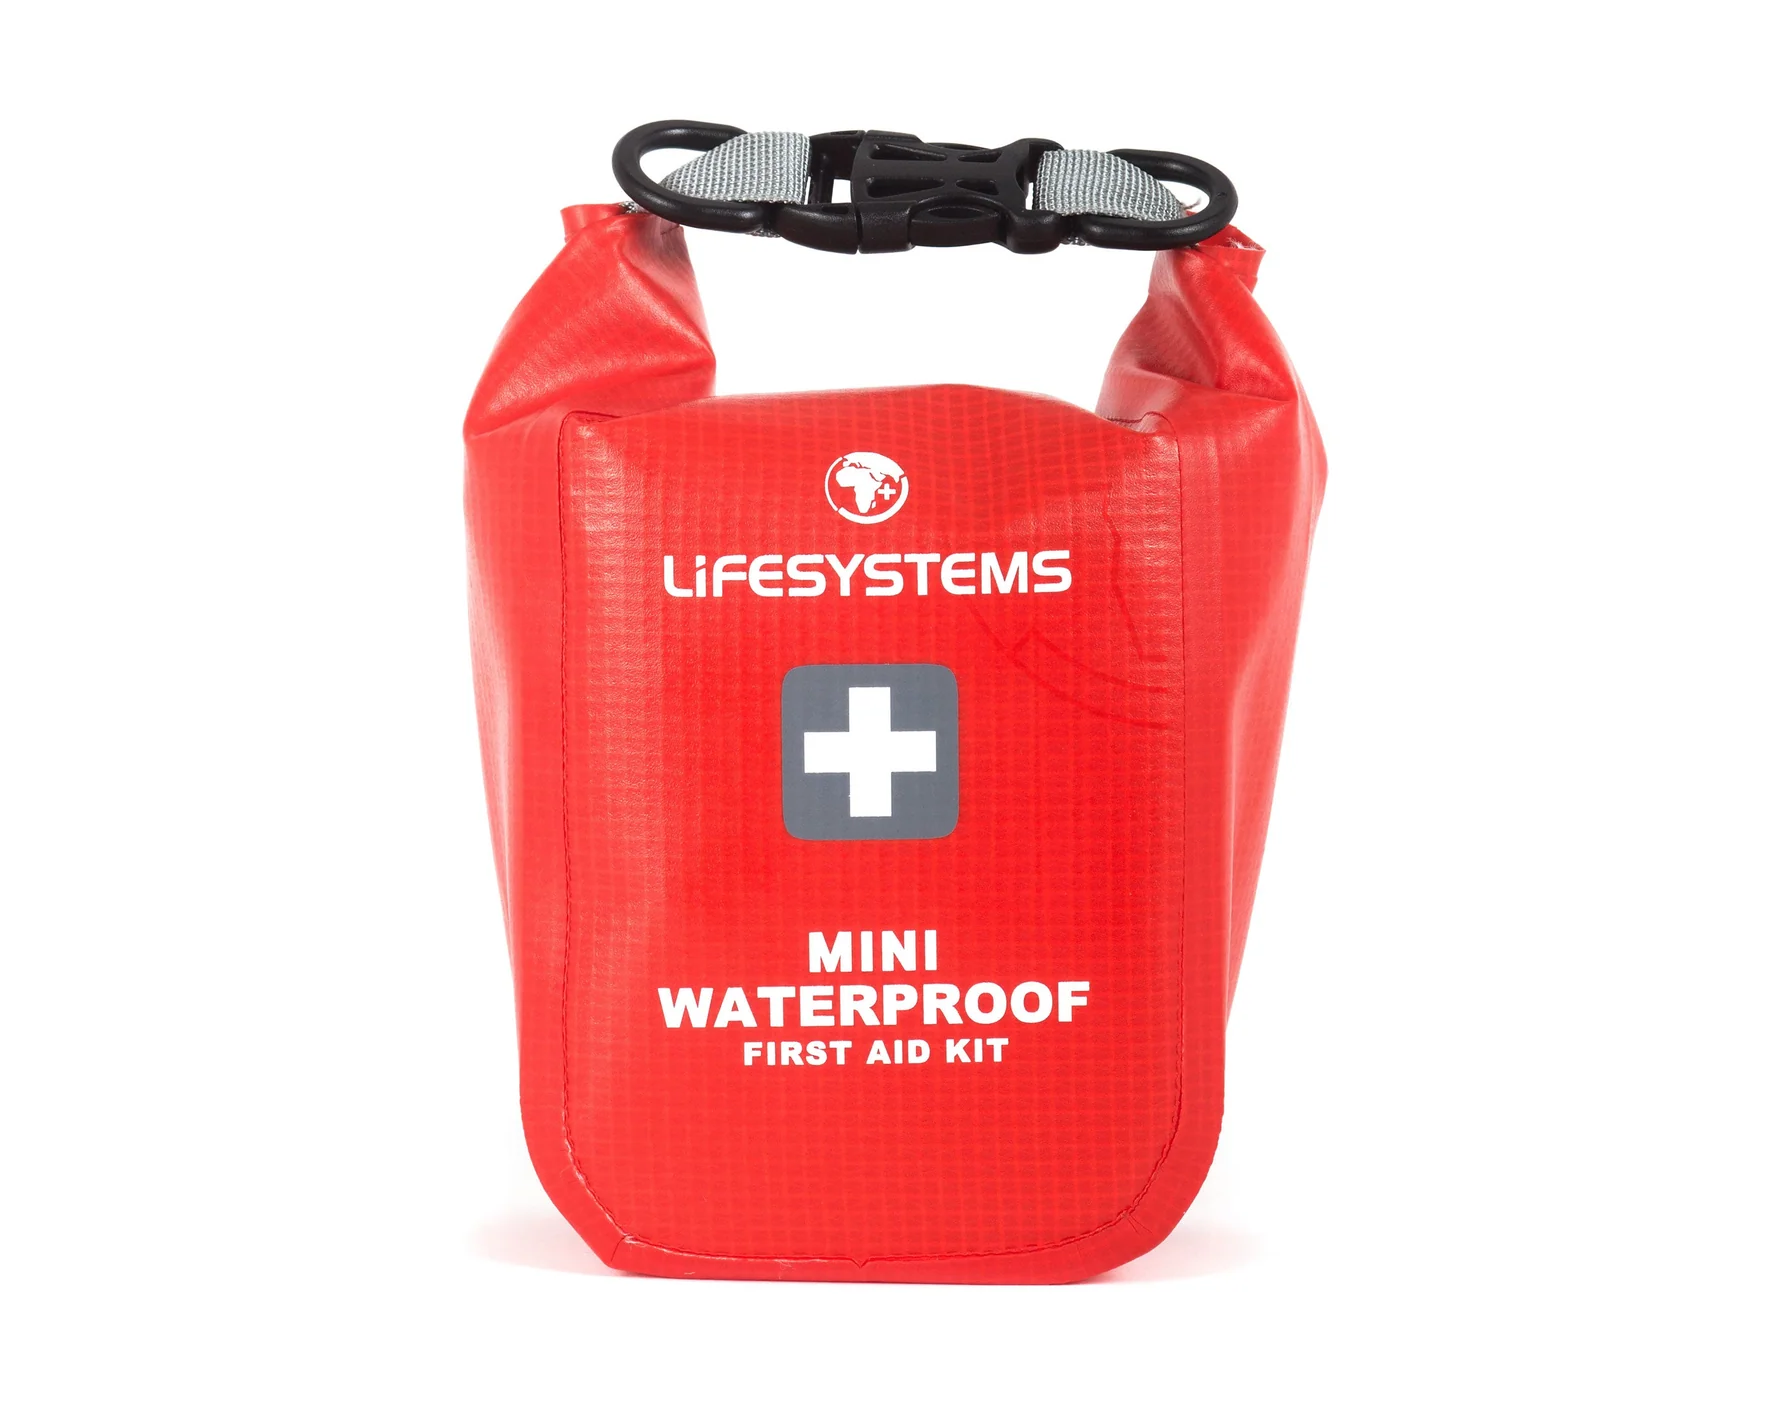 Lifesystems Mini Waterproof First Aid Kit Red